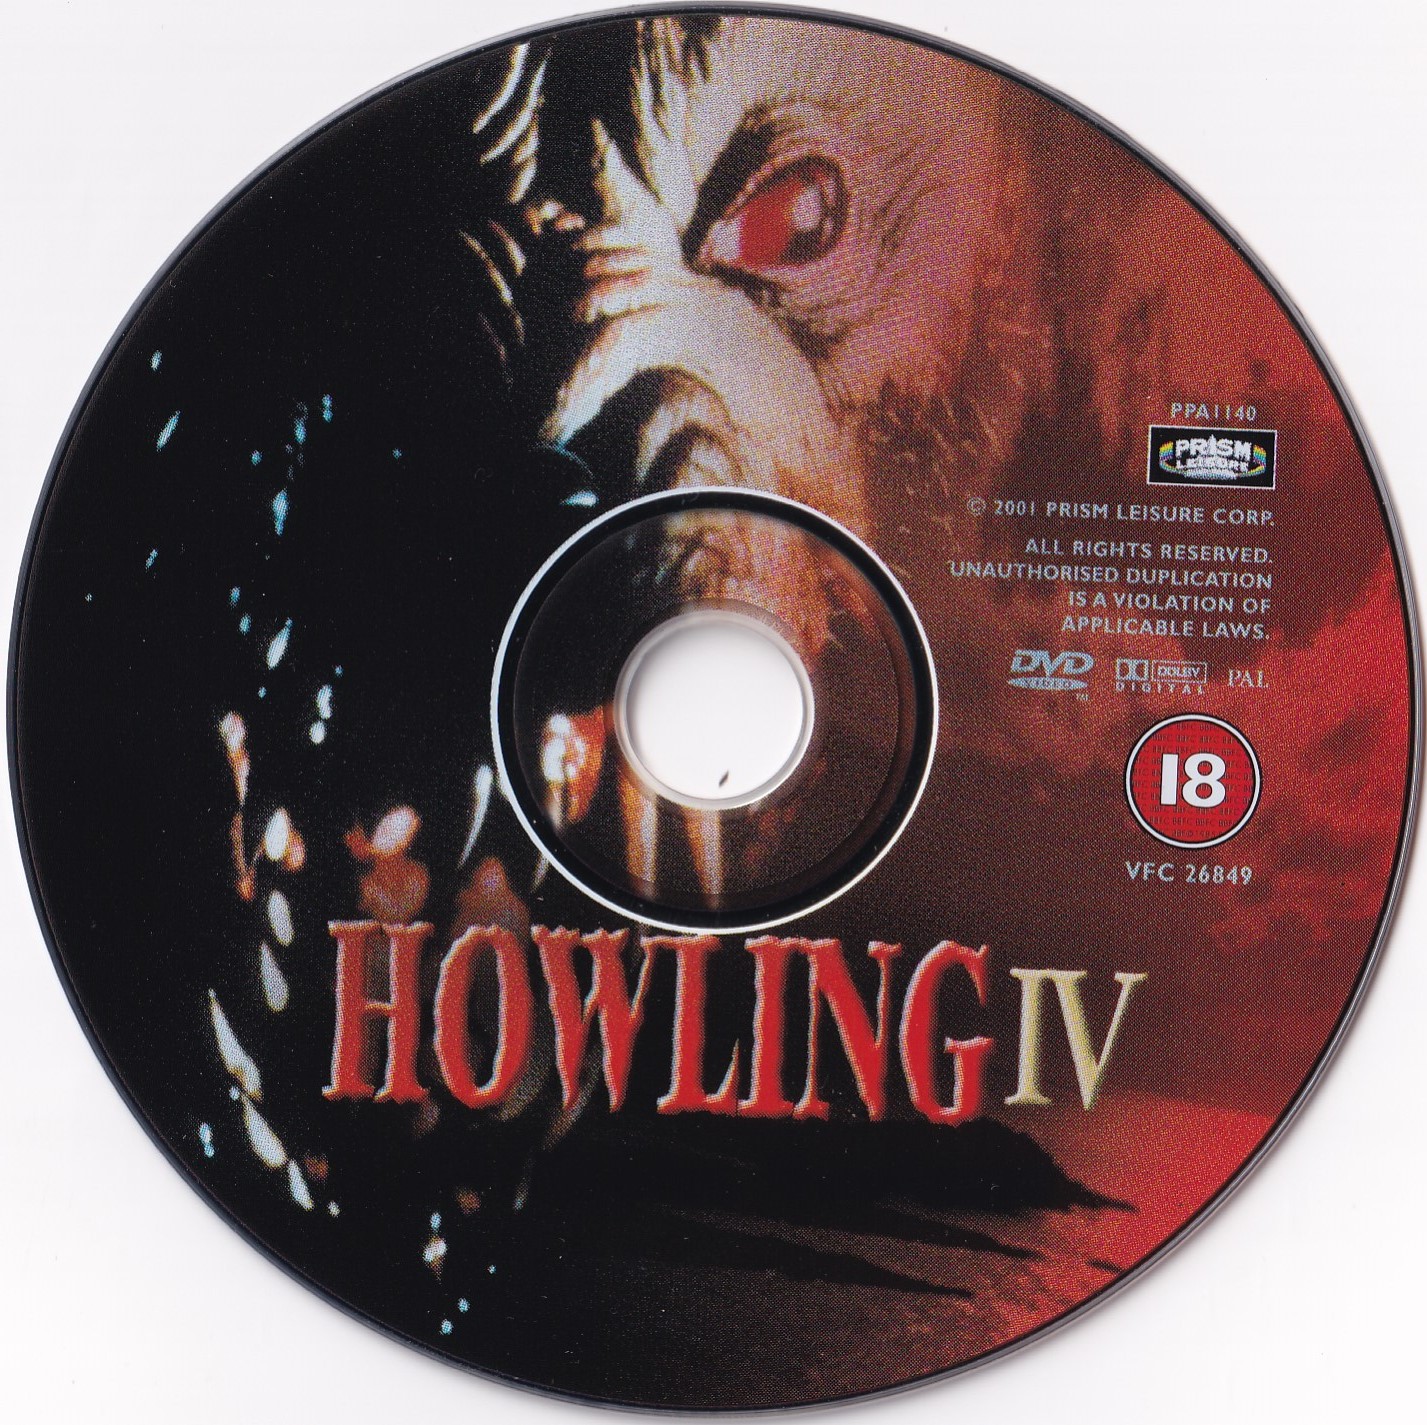 Howling IV The Original Nightmare ZONE 1